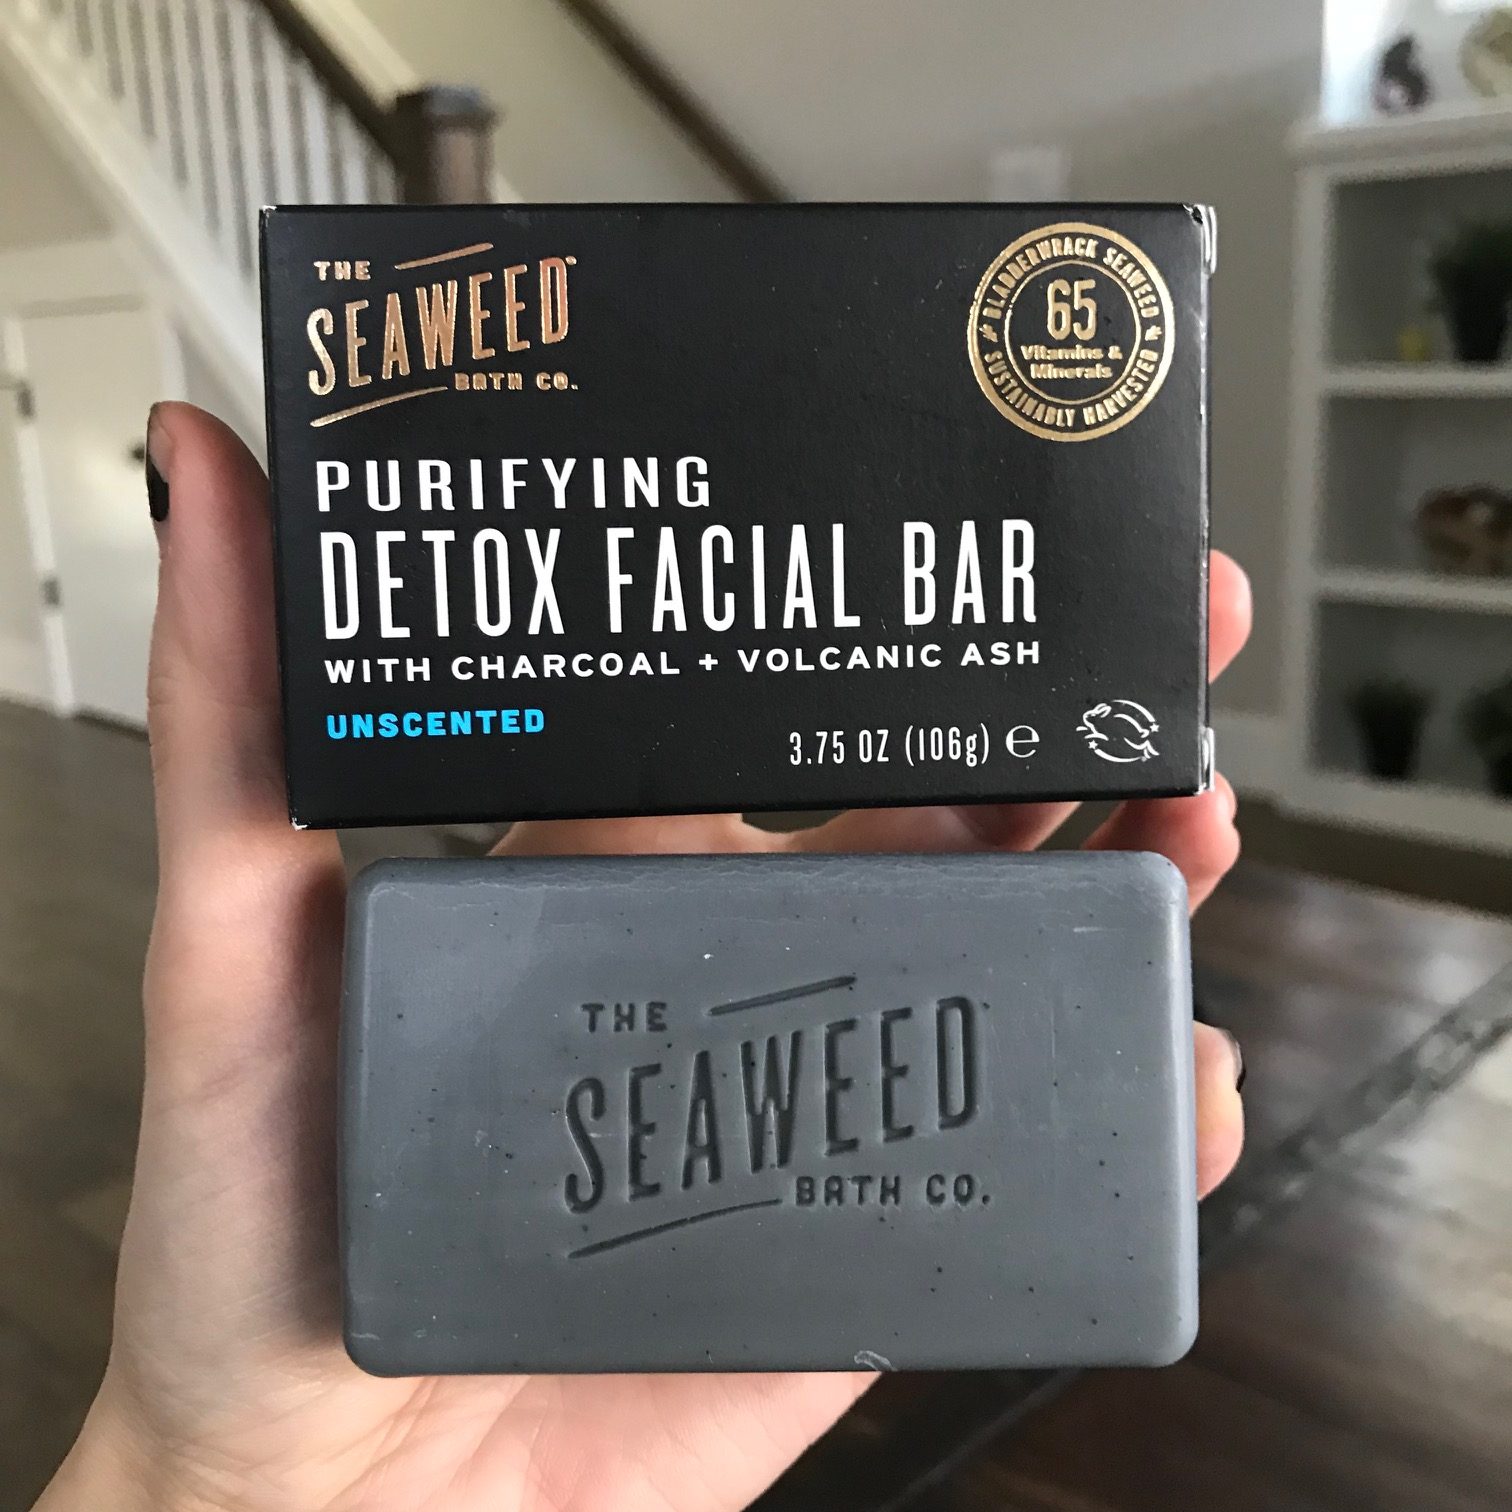 Seaweed Bath Co. Detox Facial Bar